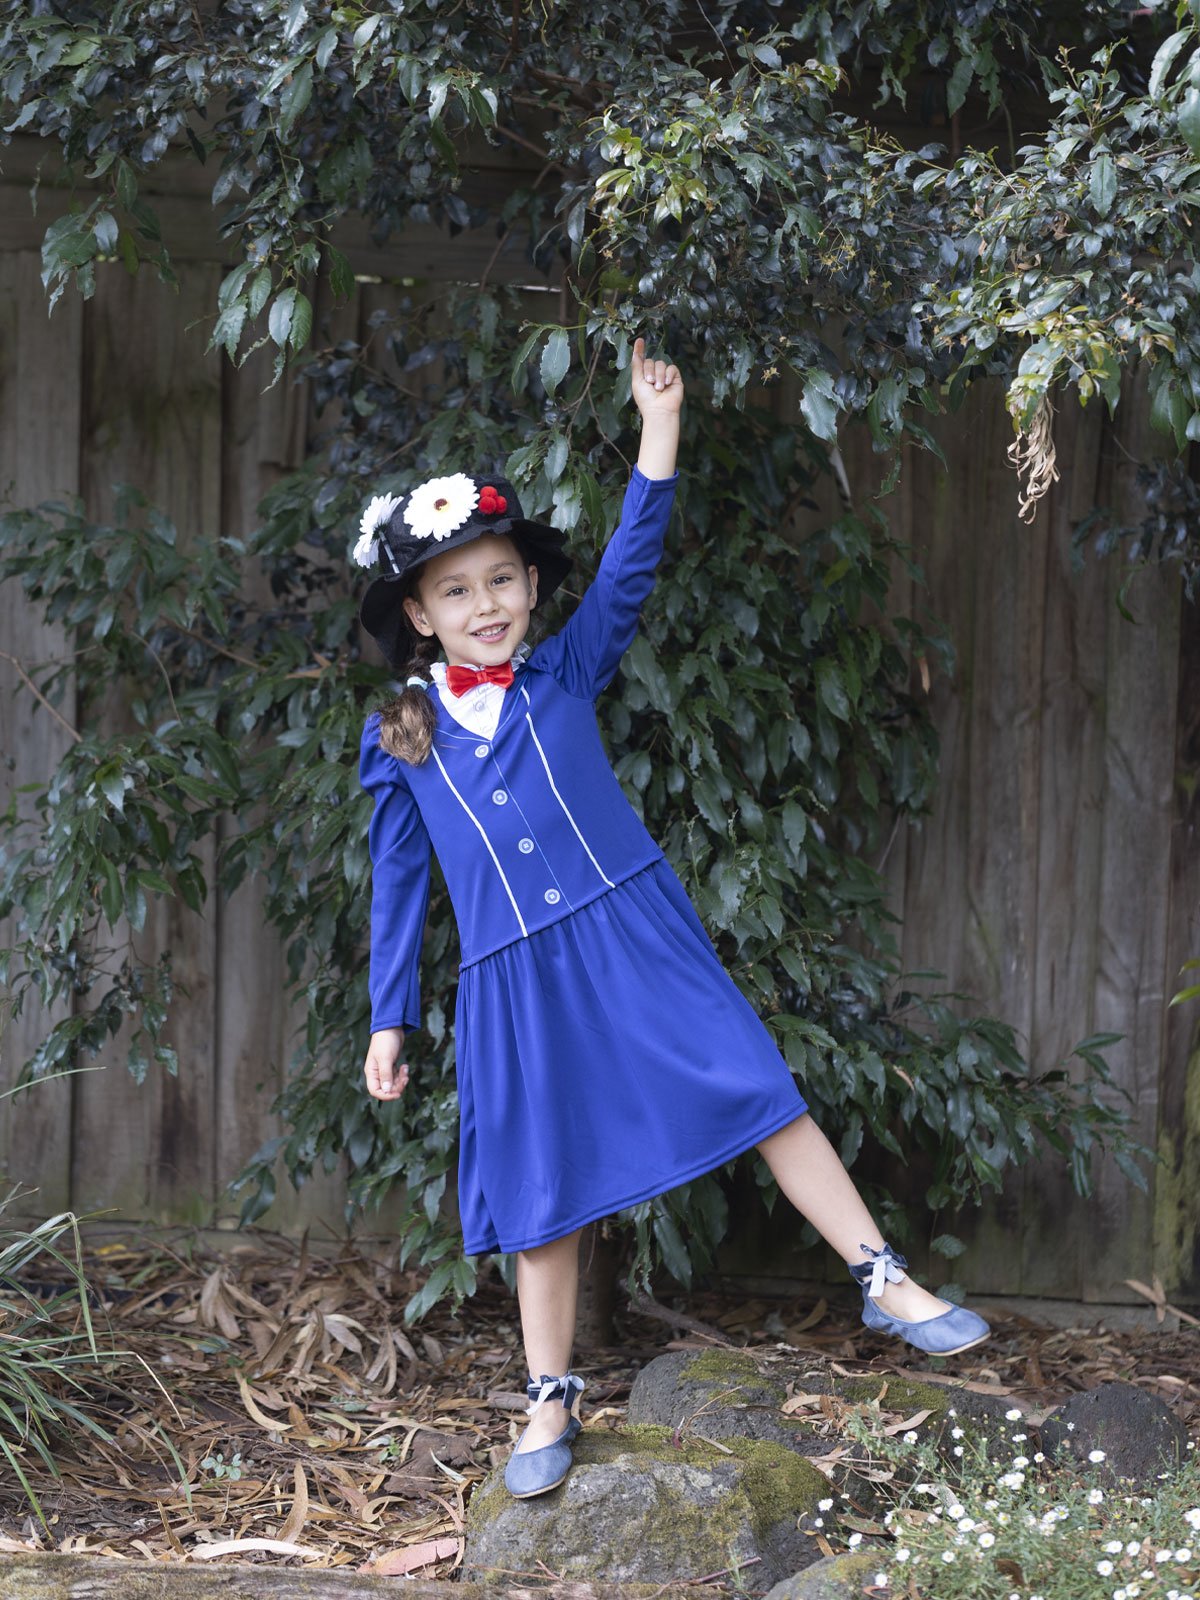 Costume Child Mary Poppins